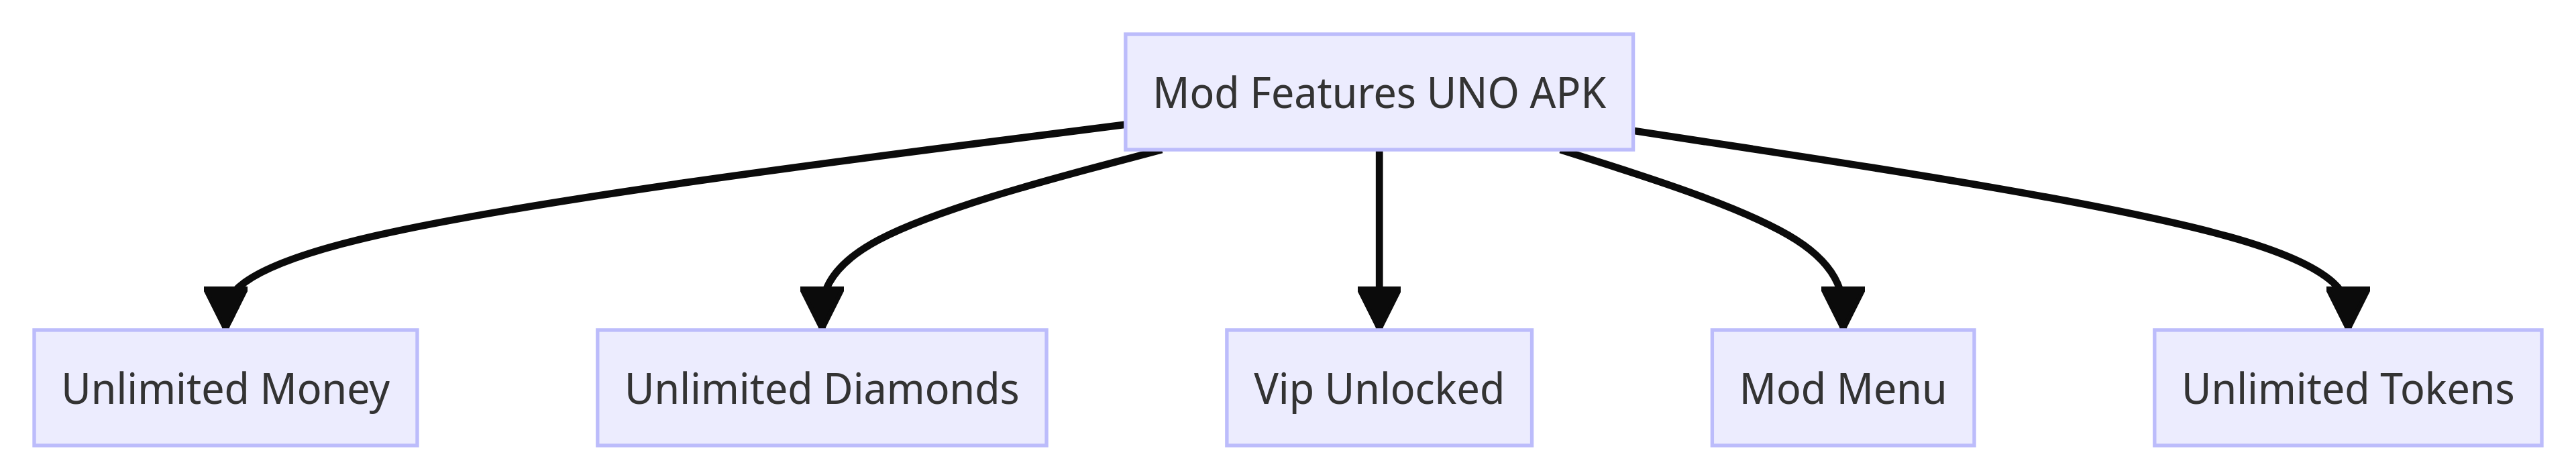 Mod Features UNO APK